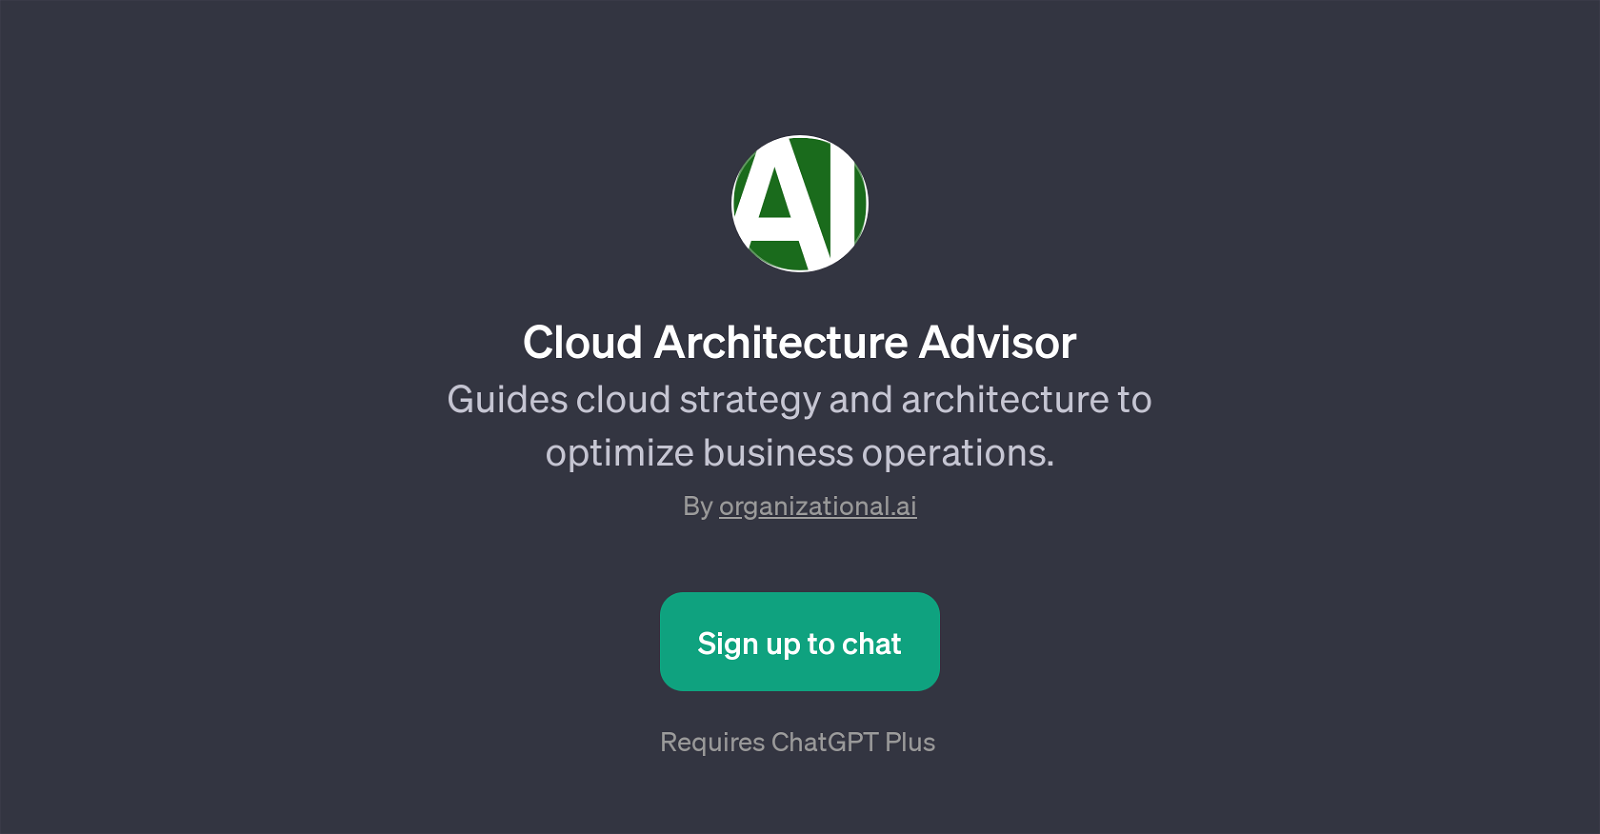 Cloud Architecture Advisor website